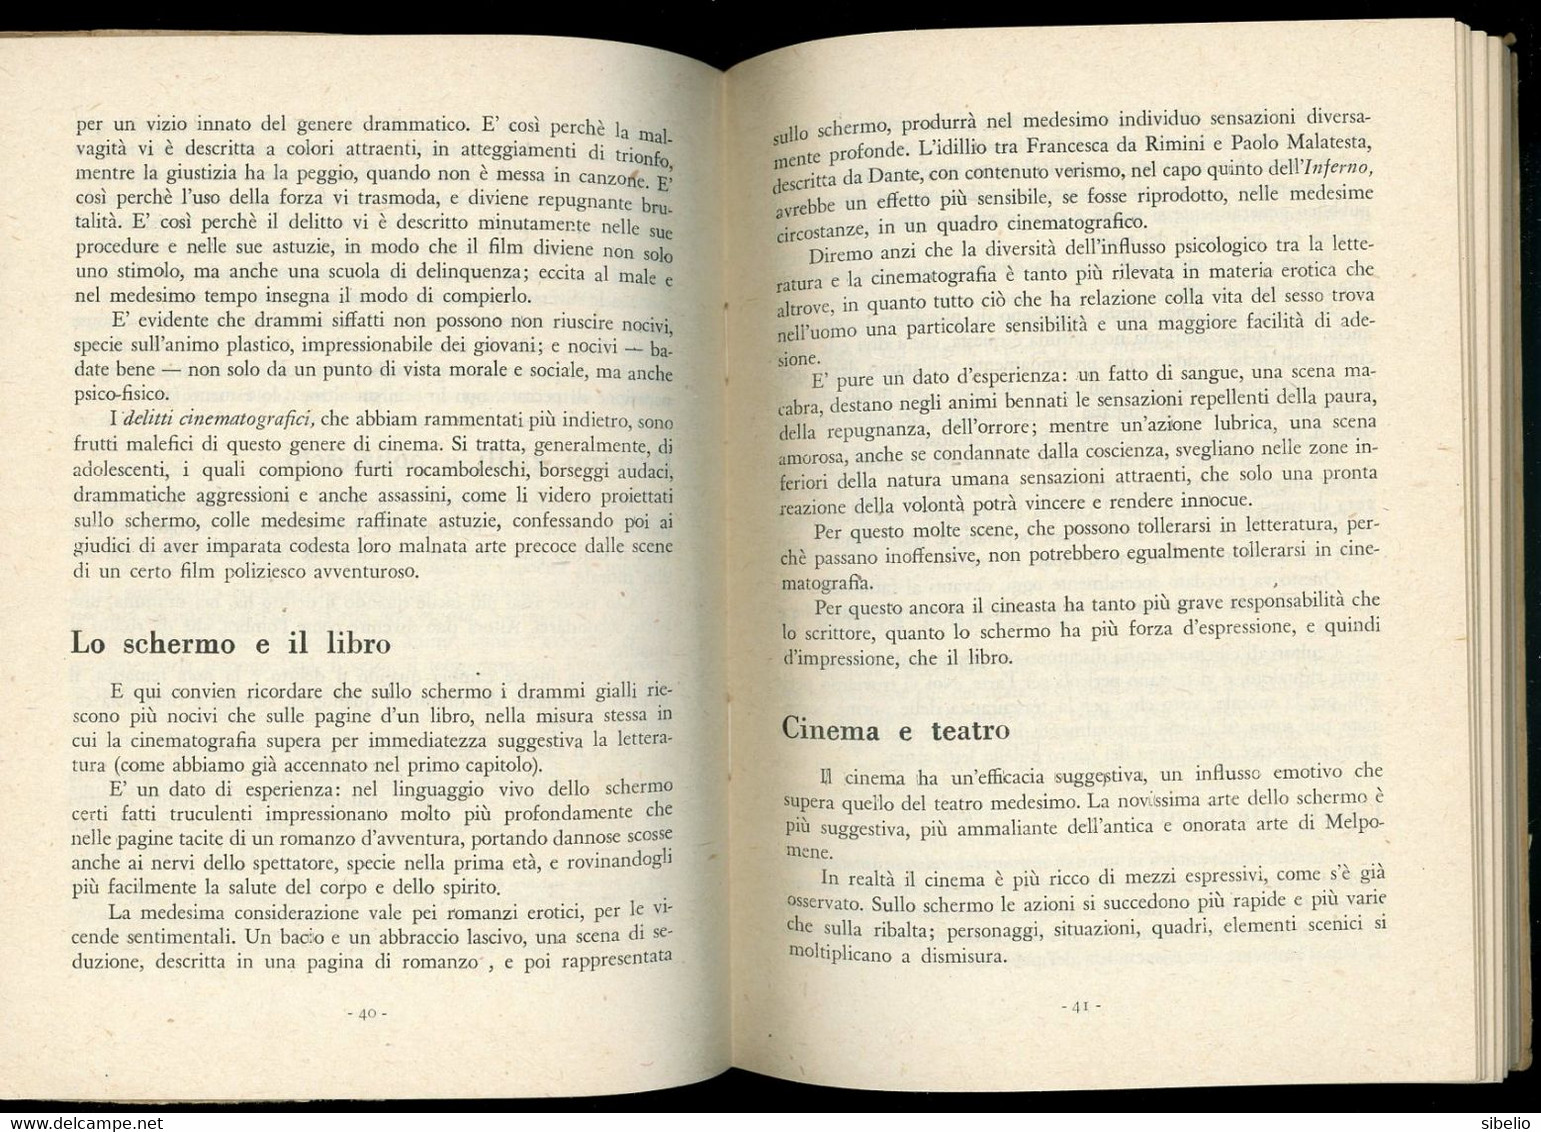 Cinema E Morale - Luigi Civardi - Editore AVE 1946 - Rif L0074 - Cinéma Et Musique